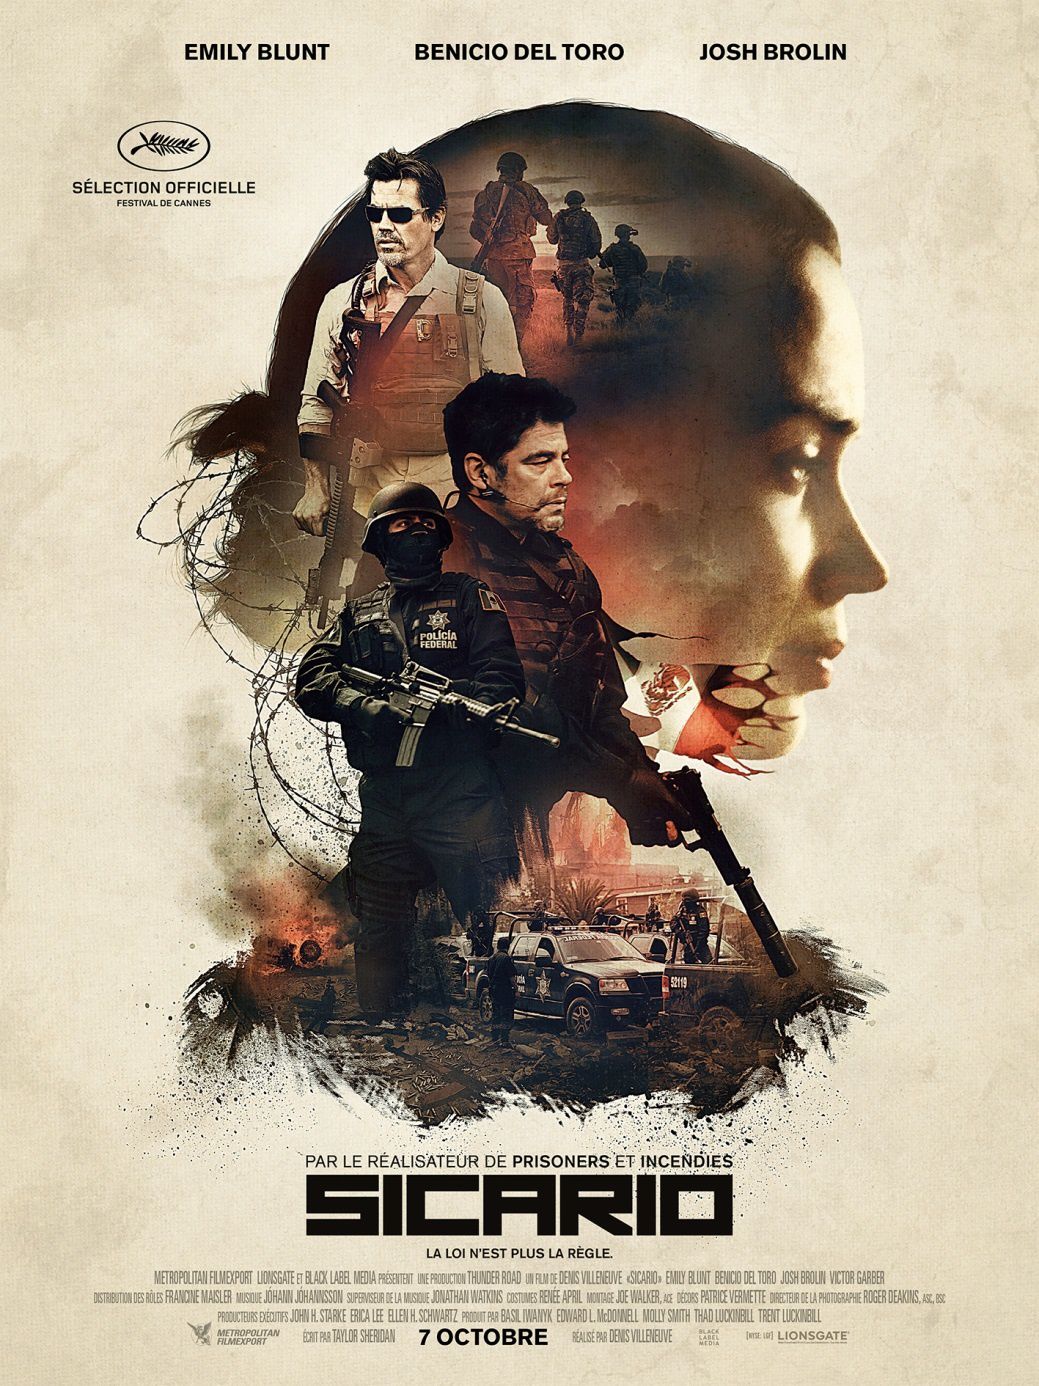 SICARIO (2 EXTRAITS VOST) avec Emily Blunt, Josh Brolin, Benicio Del Toro - Le 7 octobre 2015 au cinéma !